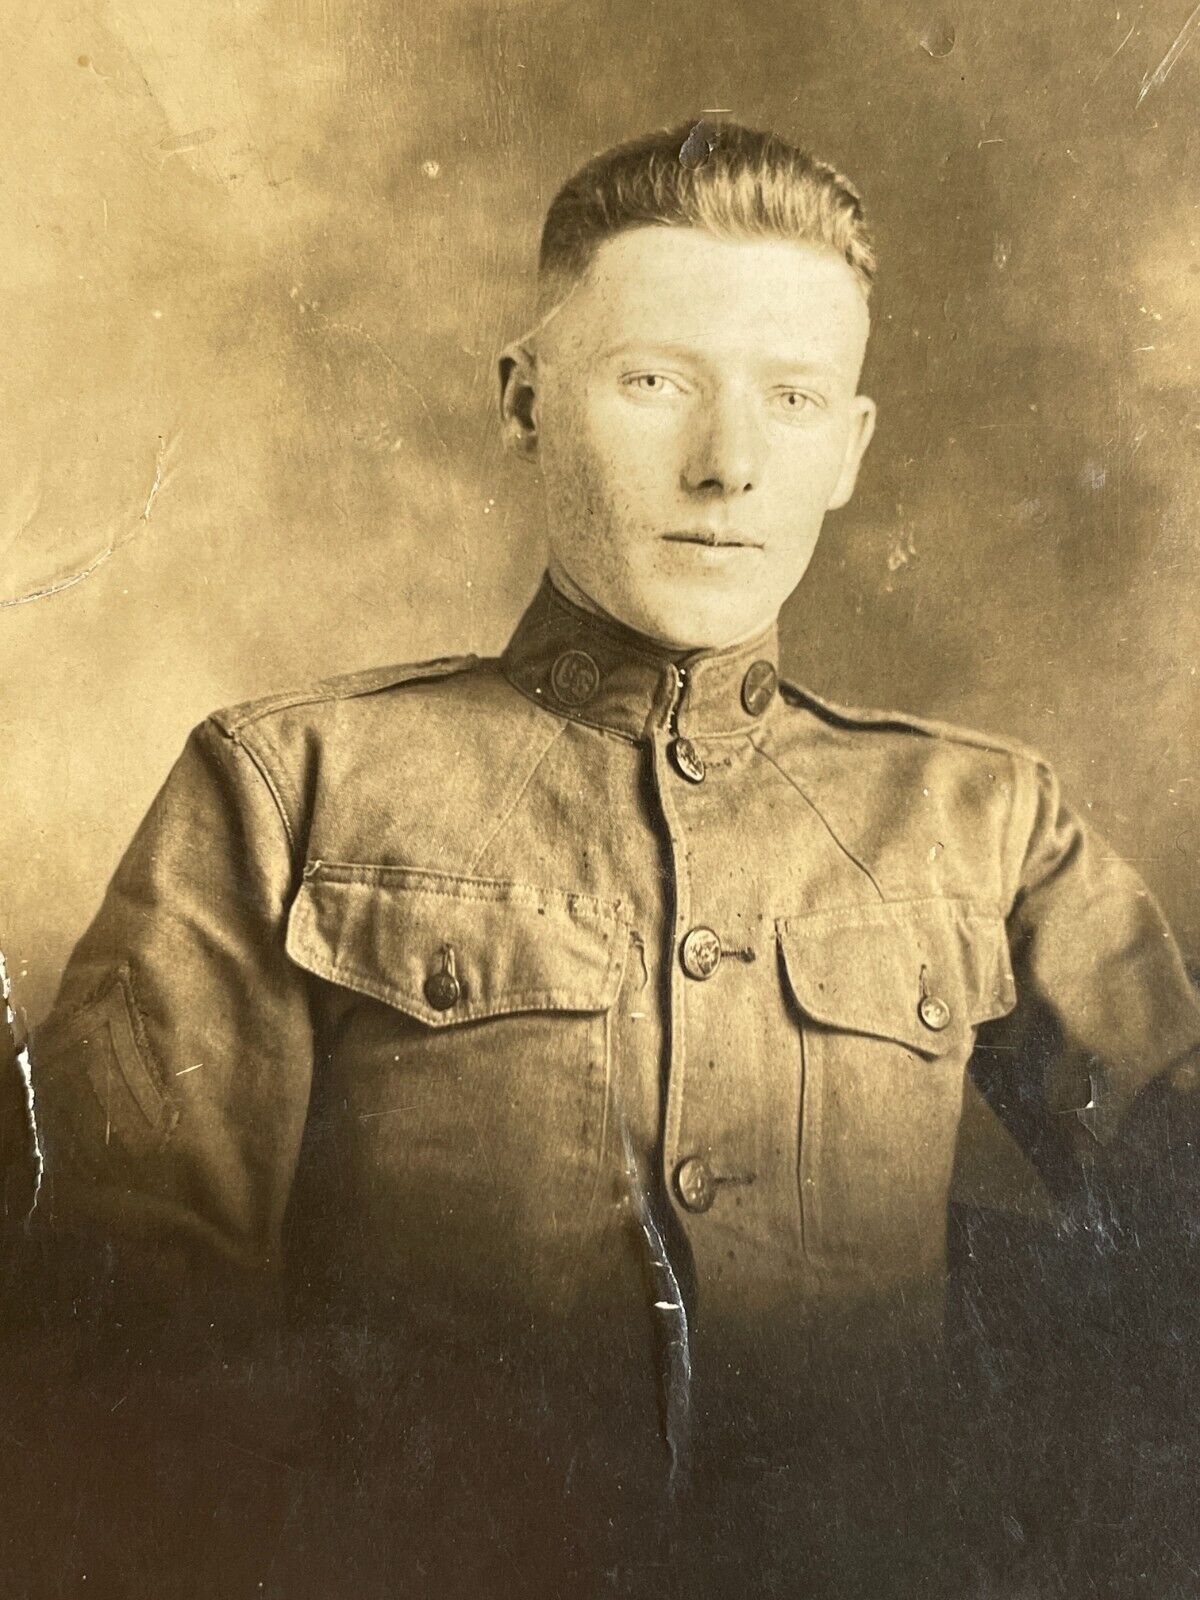 T8 RPPC Photo Postcard 1918 Handsome Attractive Soldier Uniform Haircut Style 